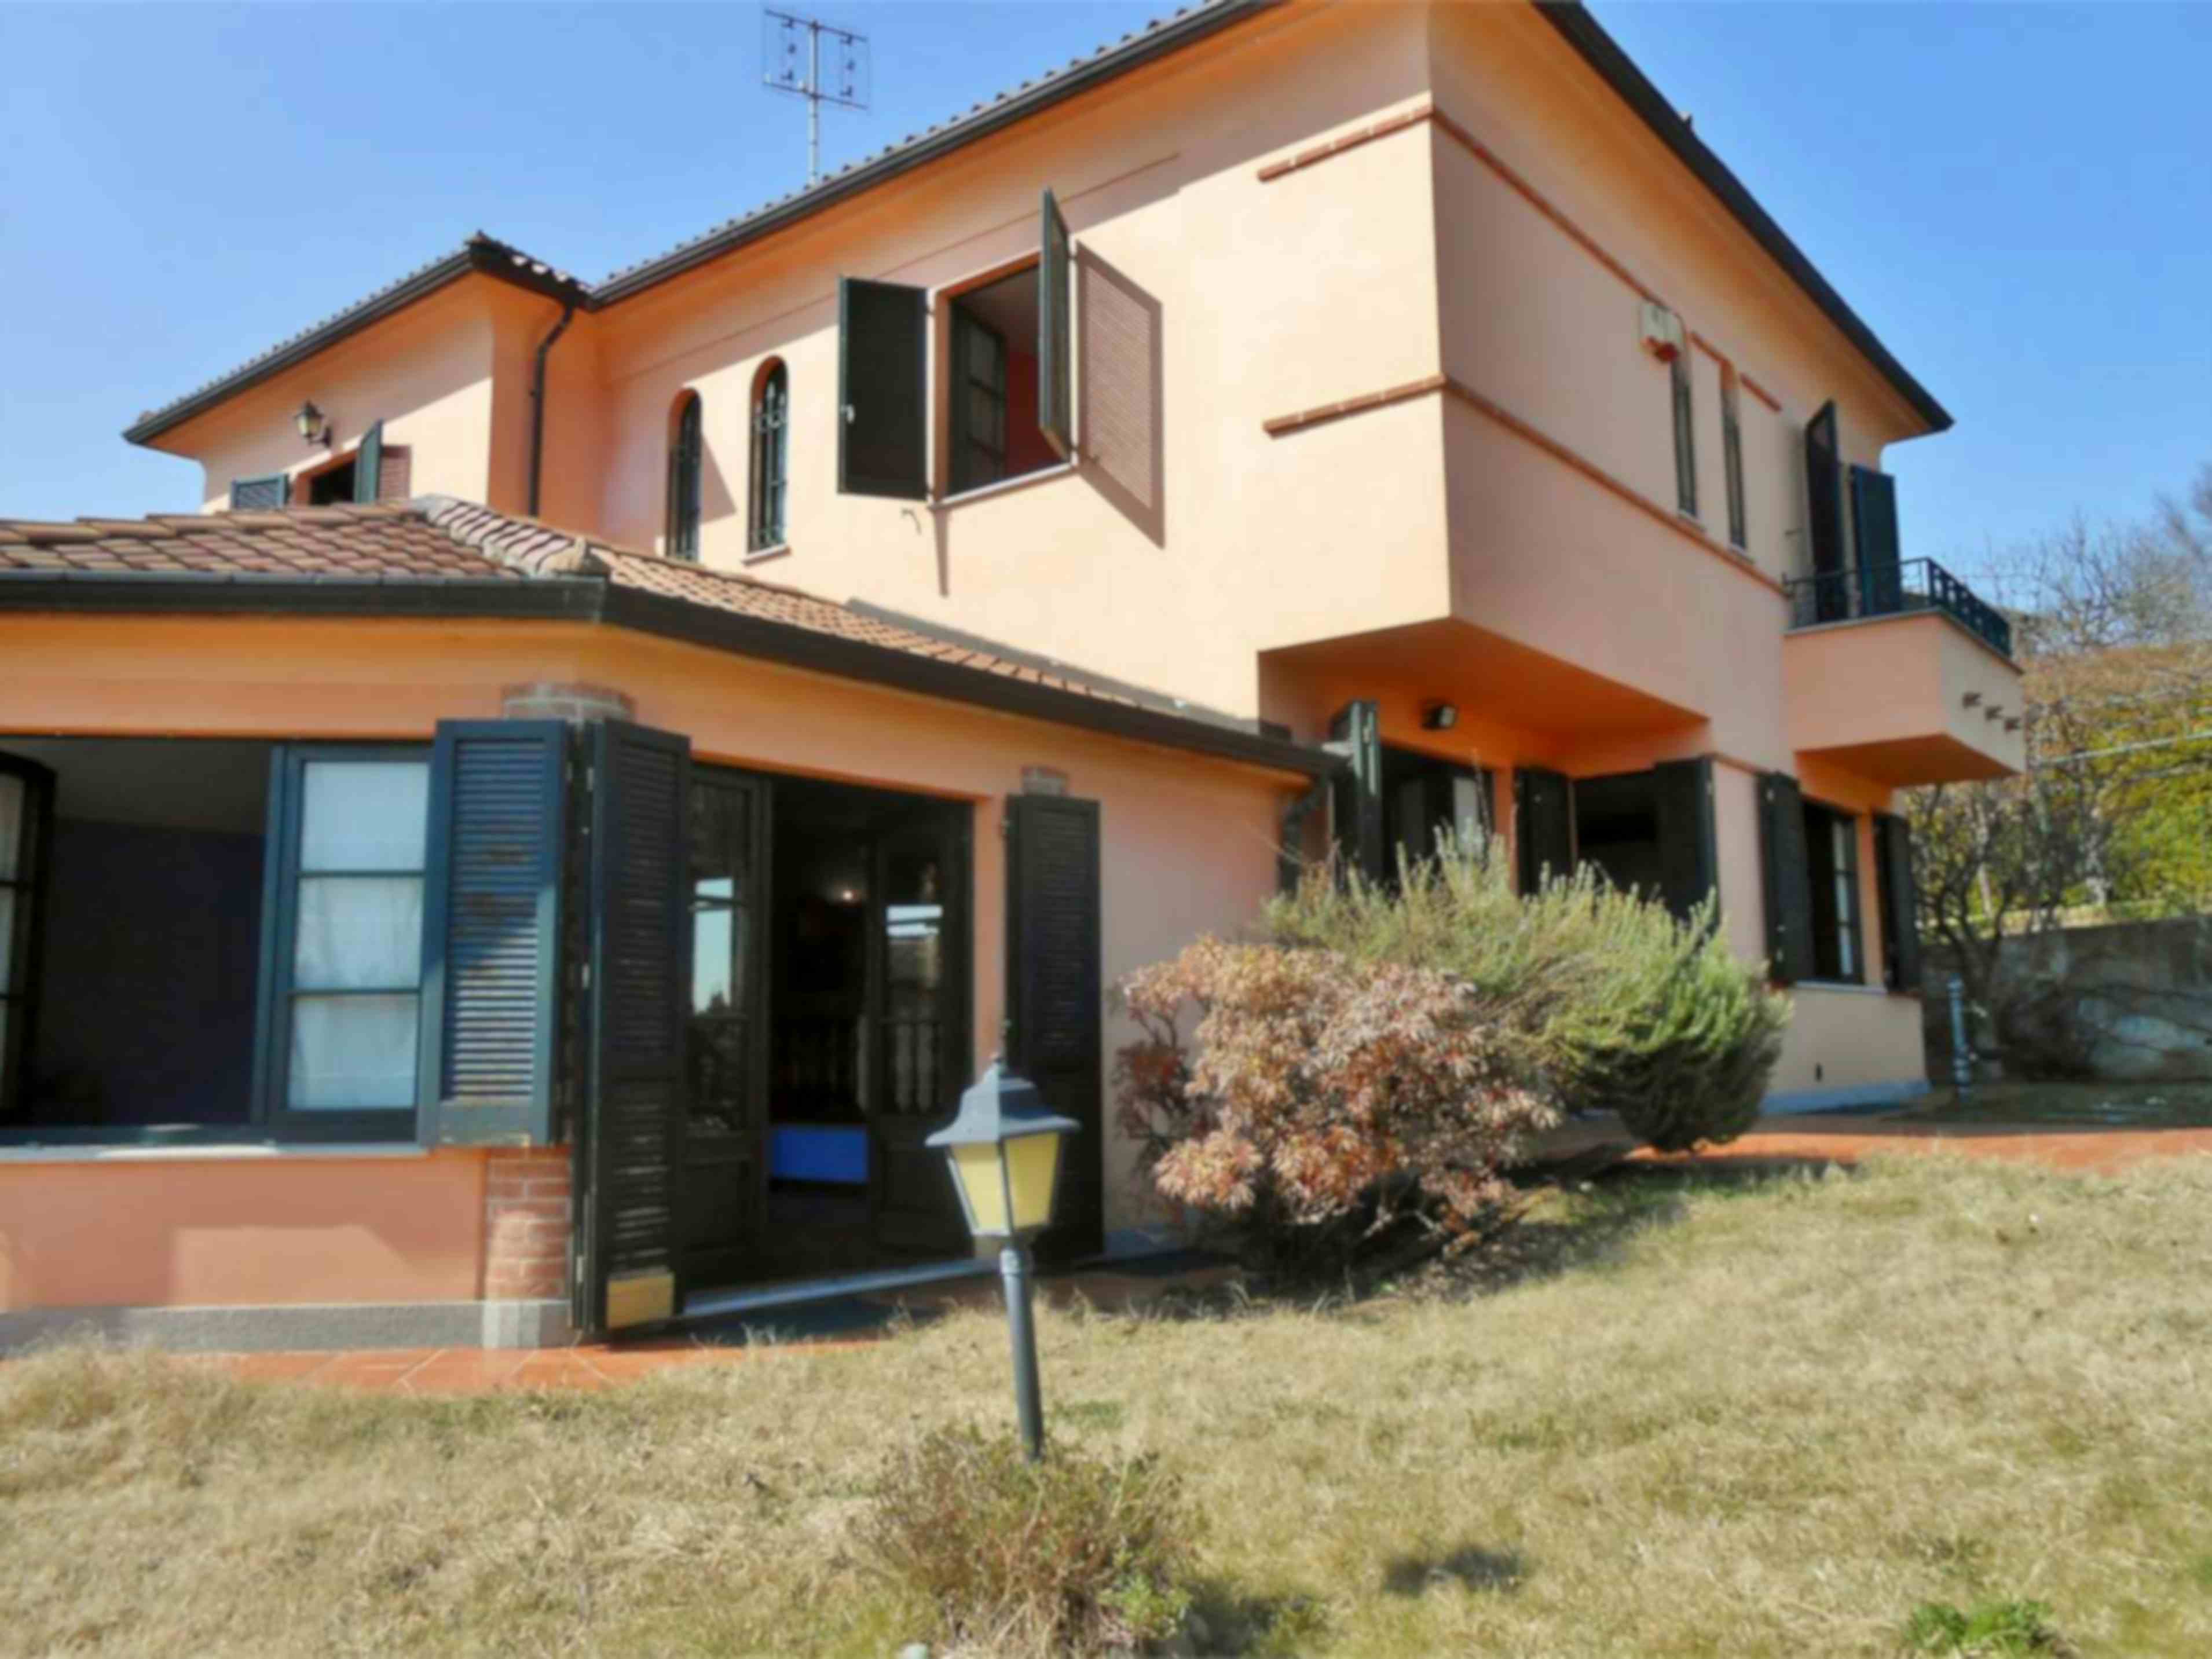 Three-bedroom Villa of 290m² in Strada Scaravaglio 